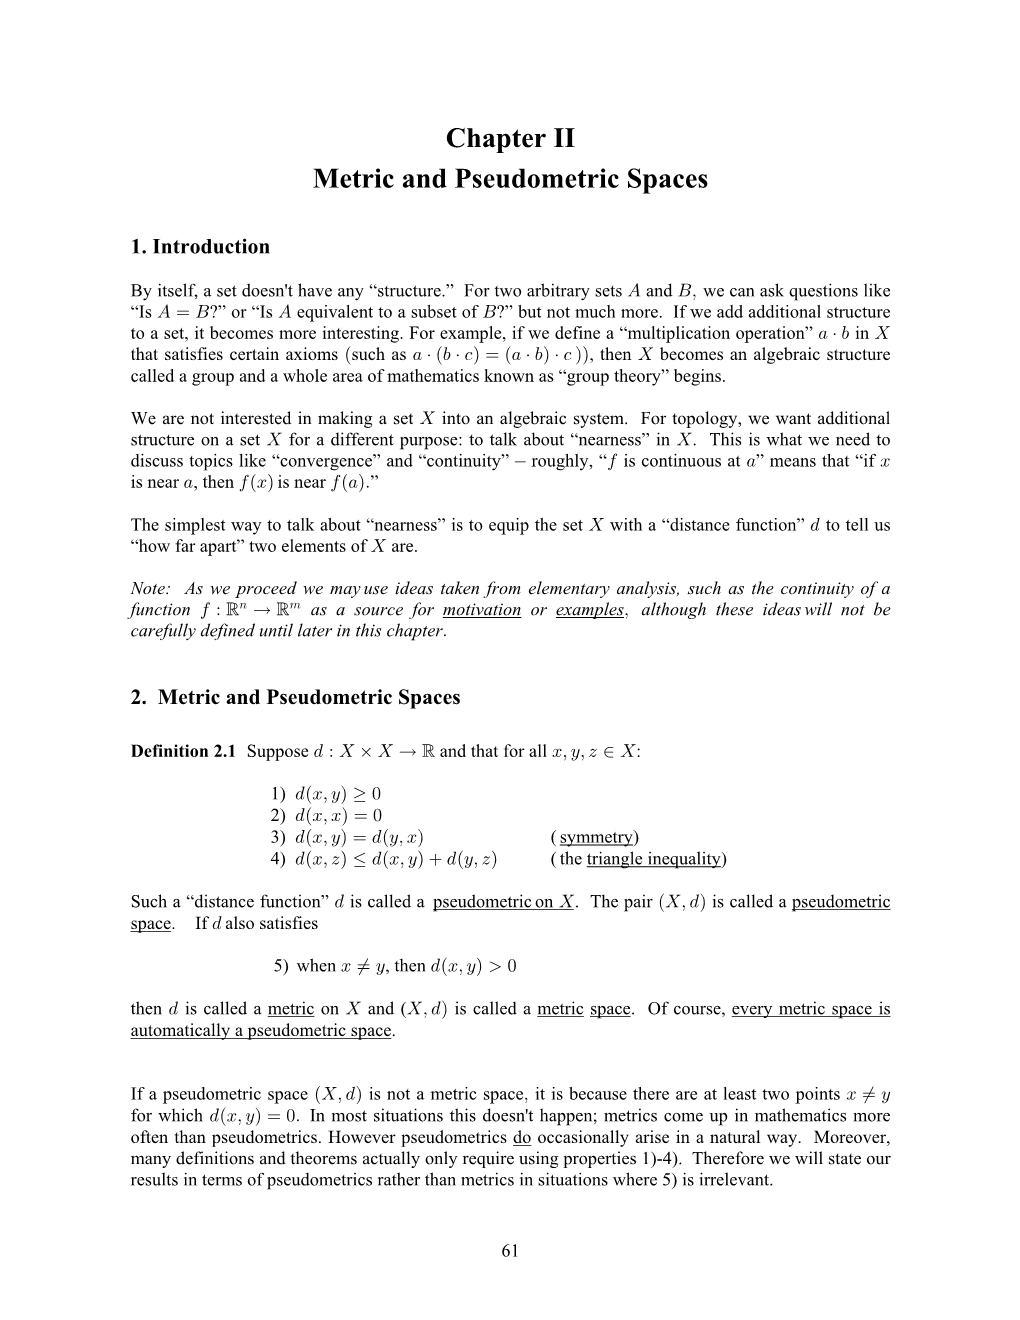 Pseudometric and Metric Spaces